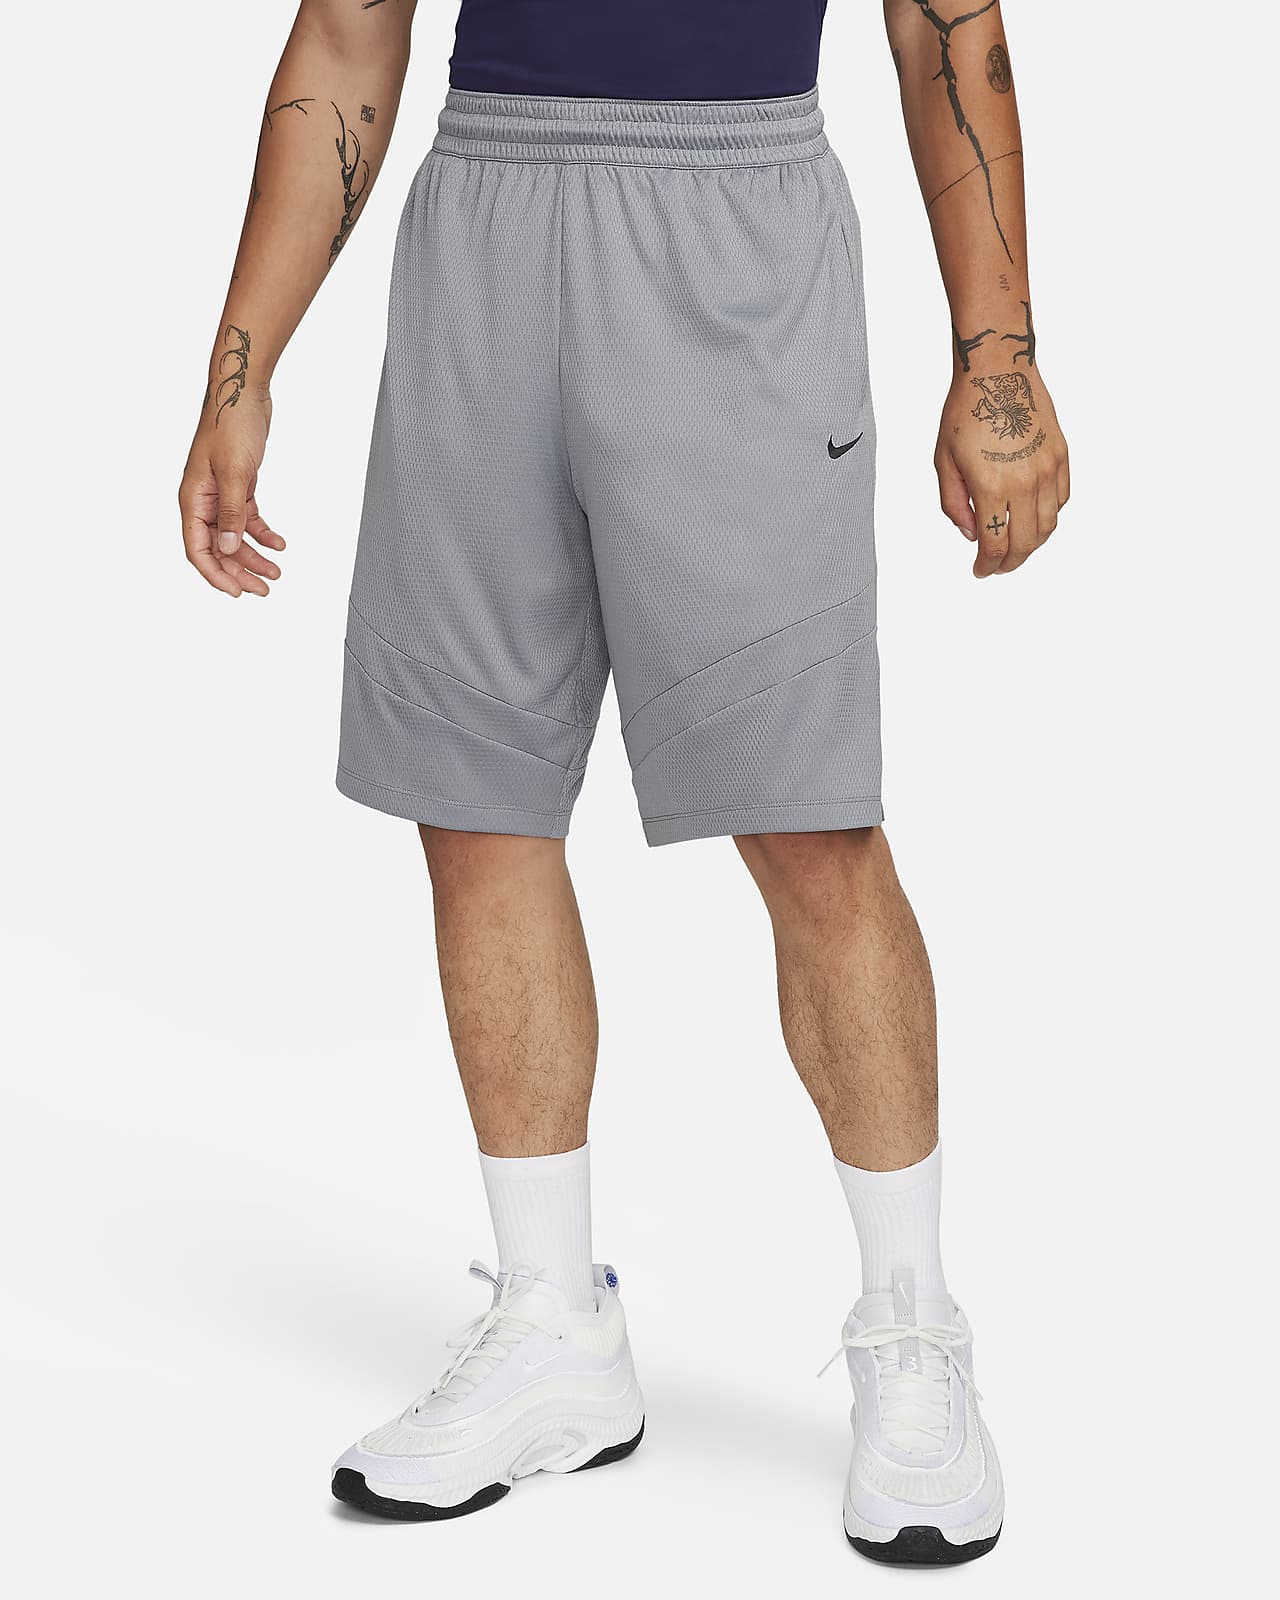 Shorts de básquetbol Dri-FIT de 28 cm para hombre Nike Icon